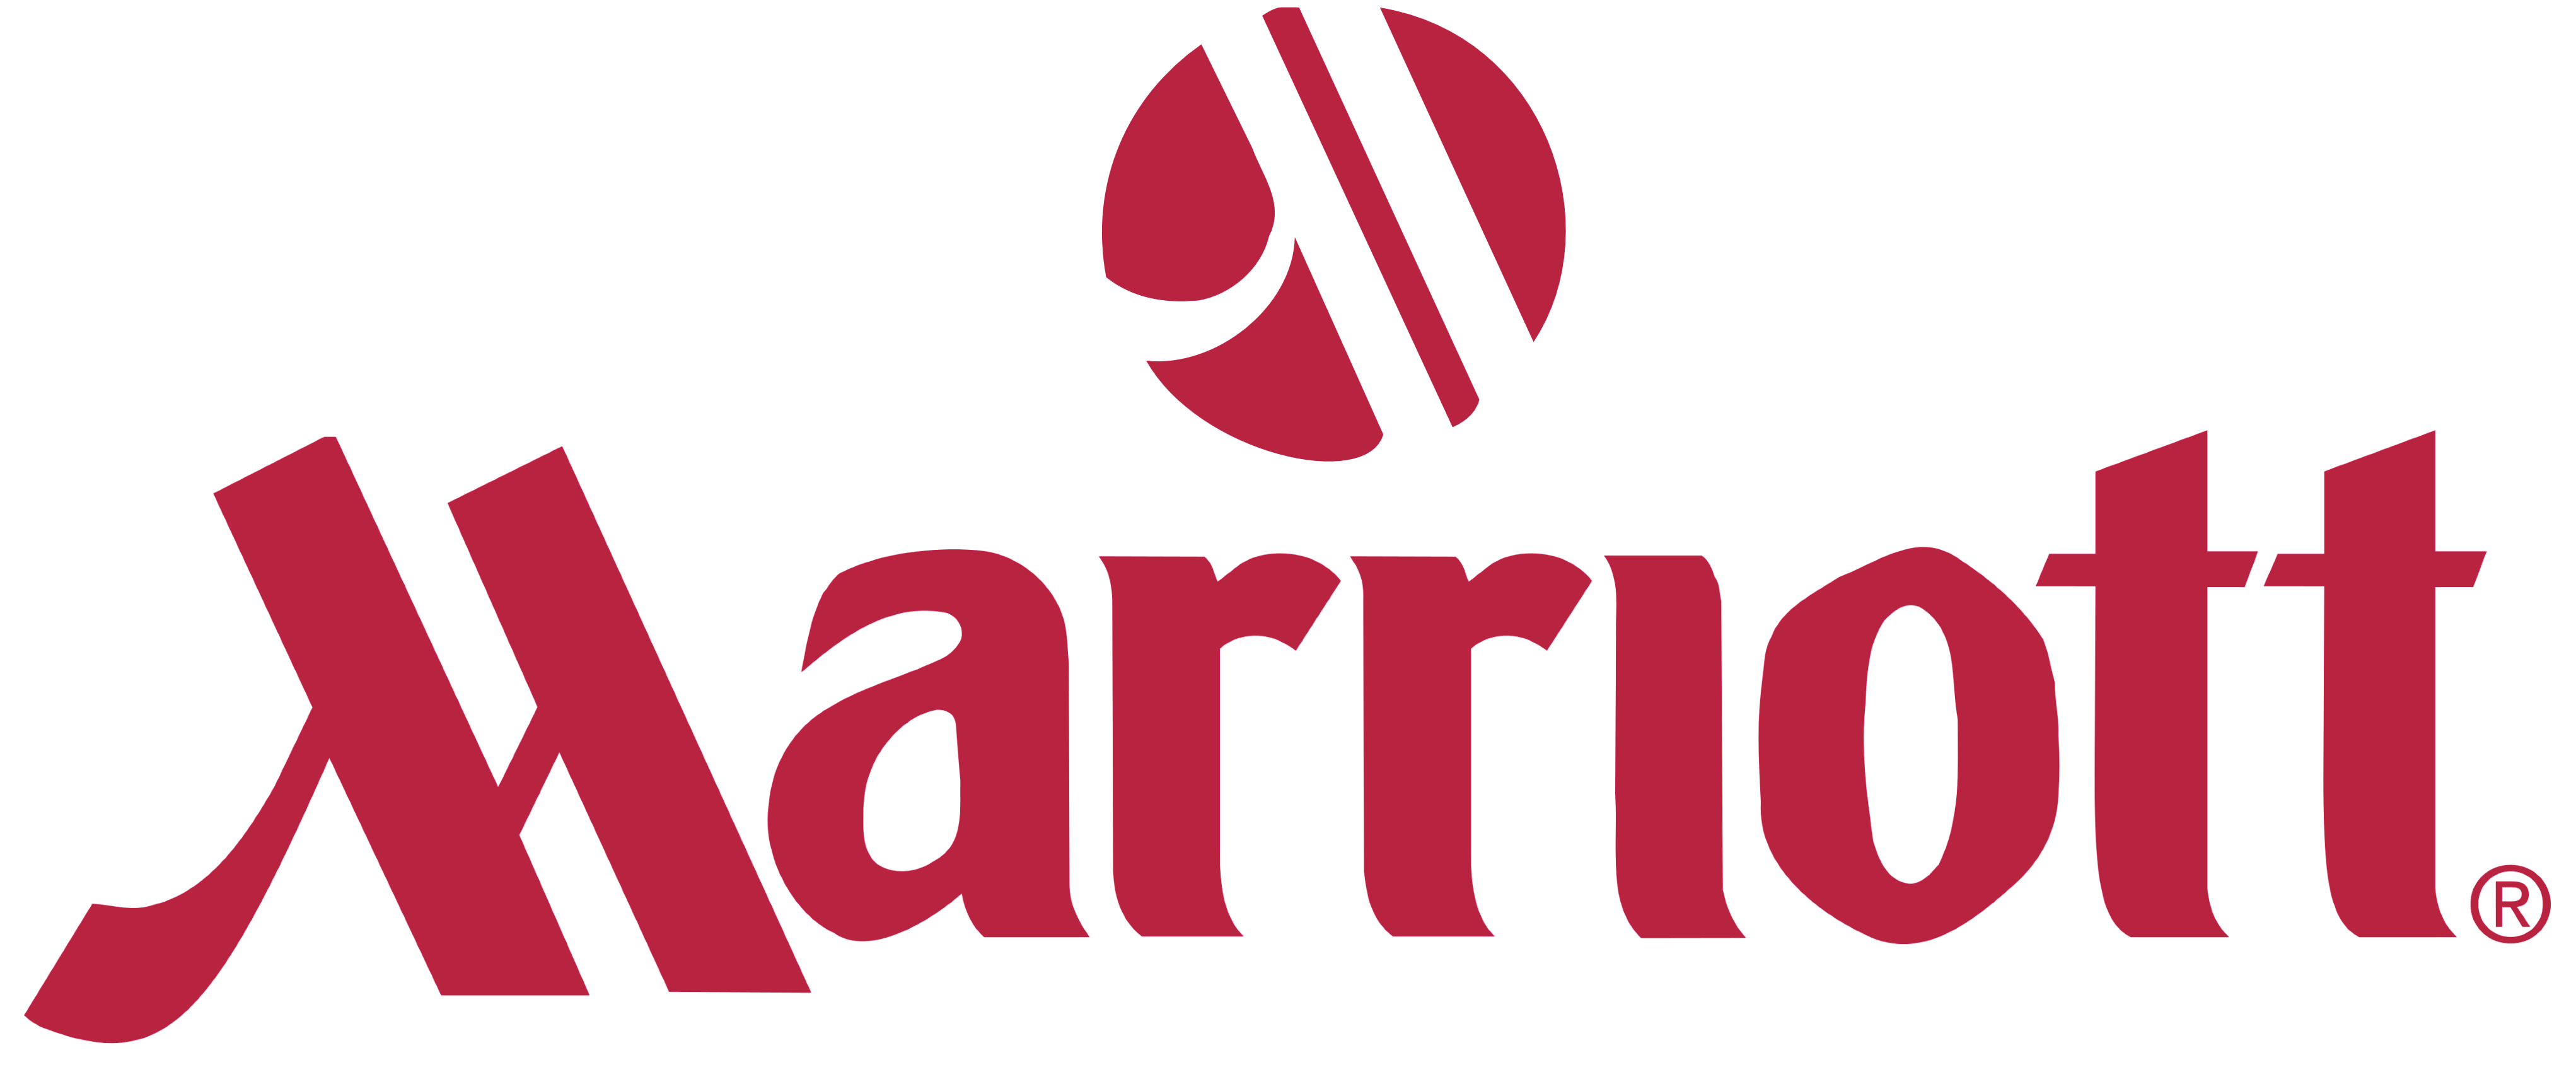 https://logos-download.com/wp-content/uploads/2016/05/Marriott_logo.png